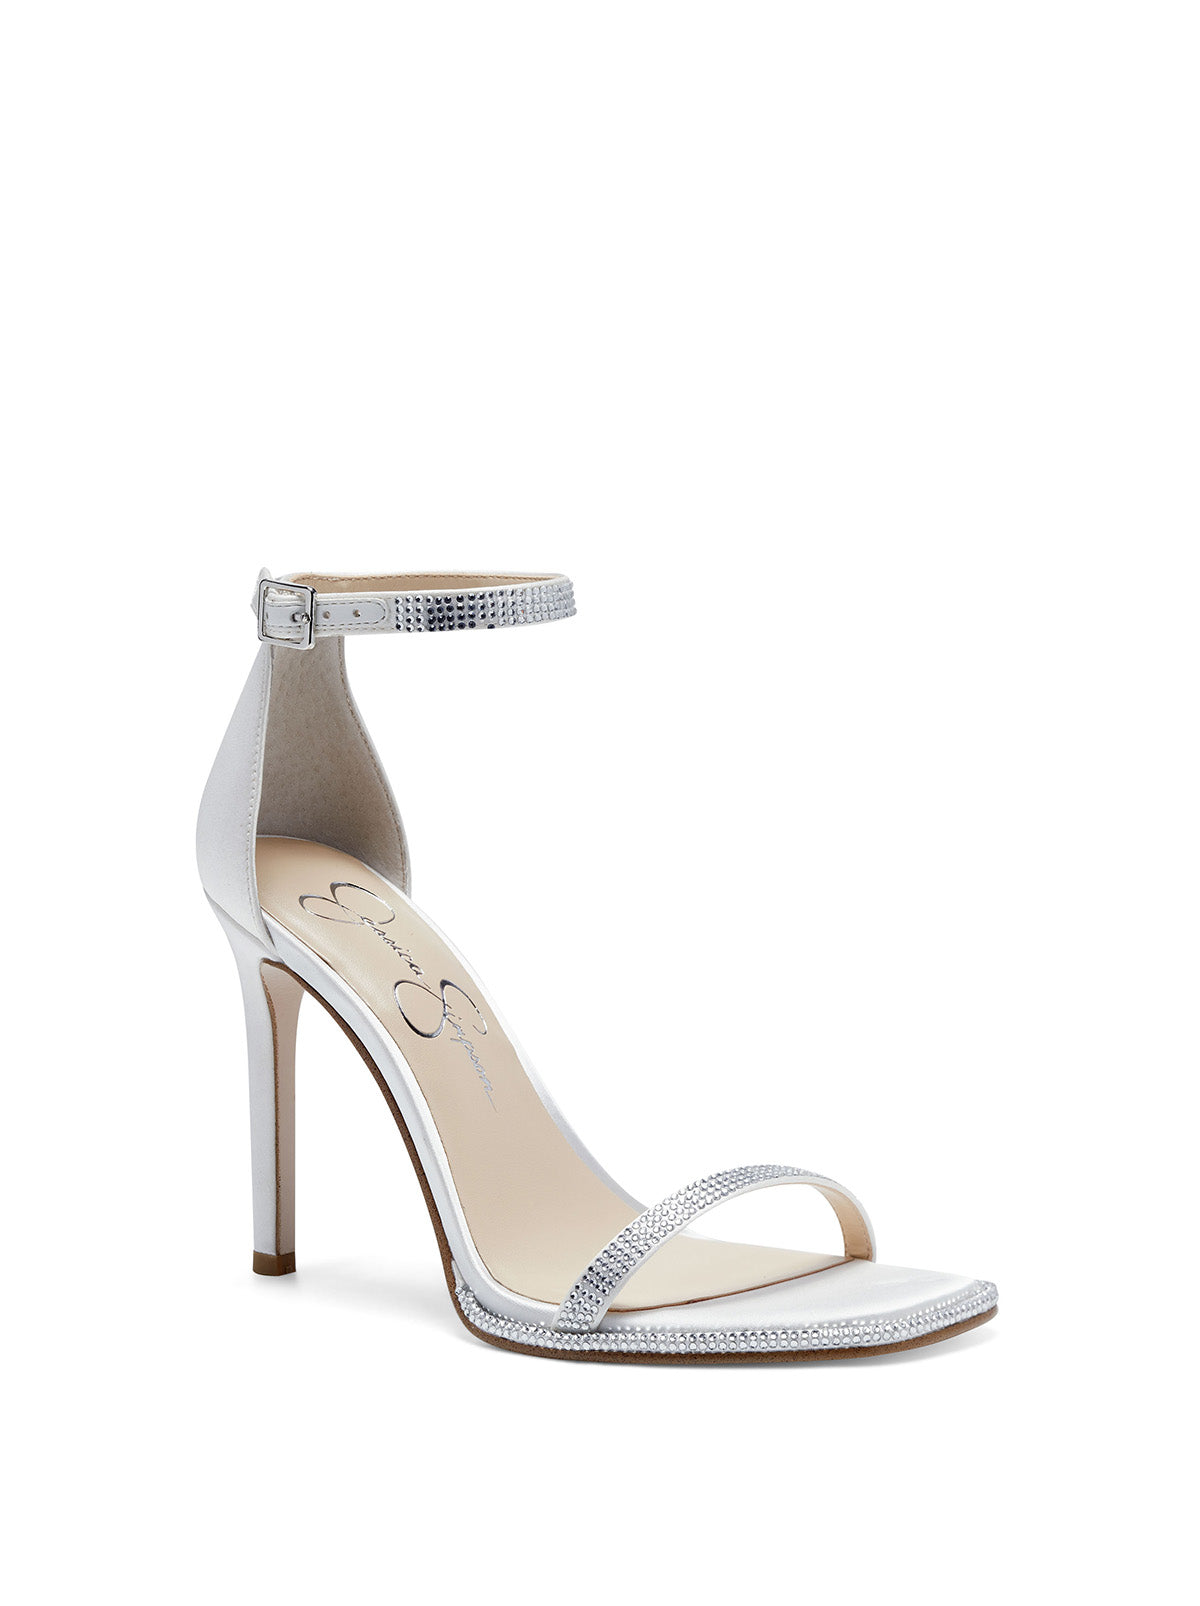 Ostey High Heel in White – Jessica Simpson